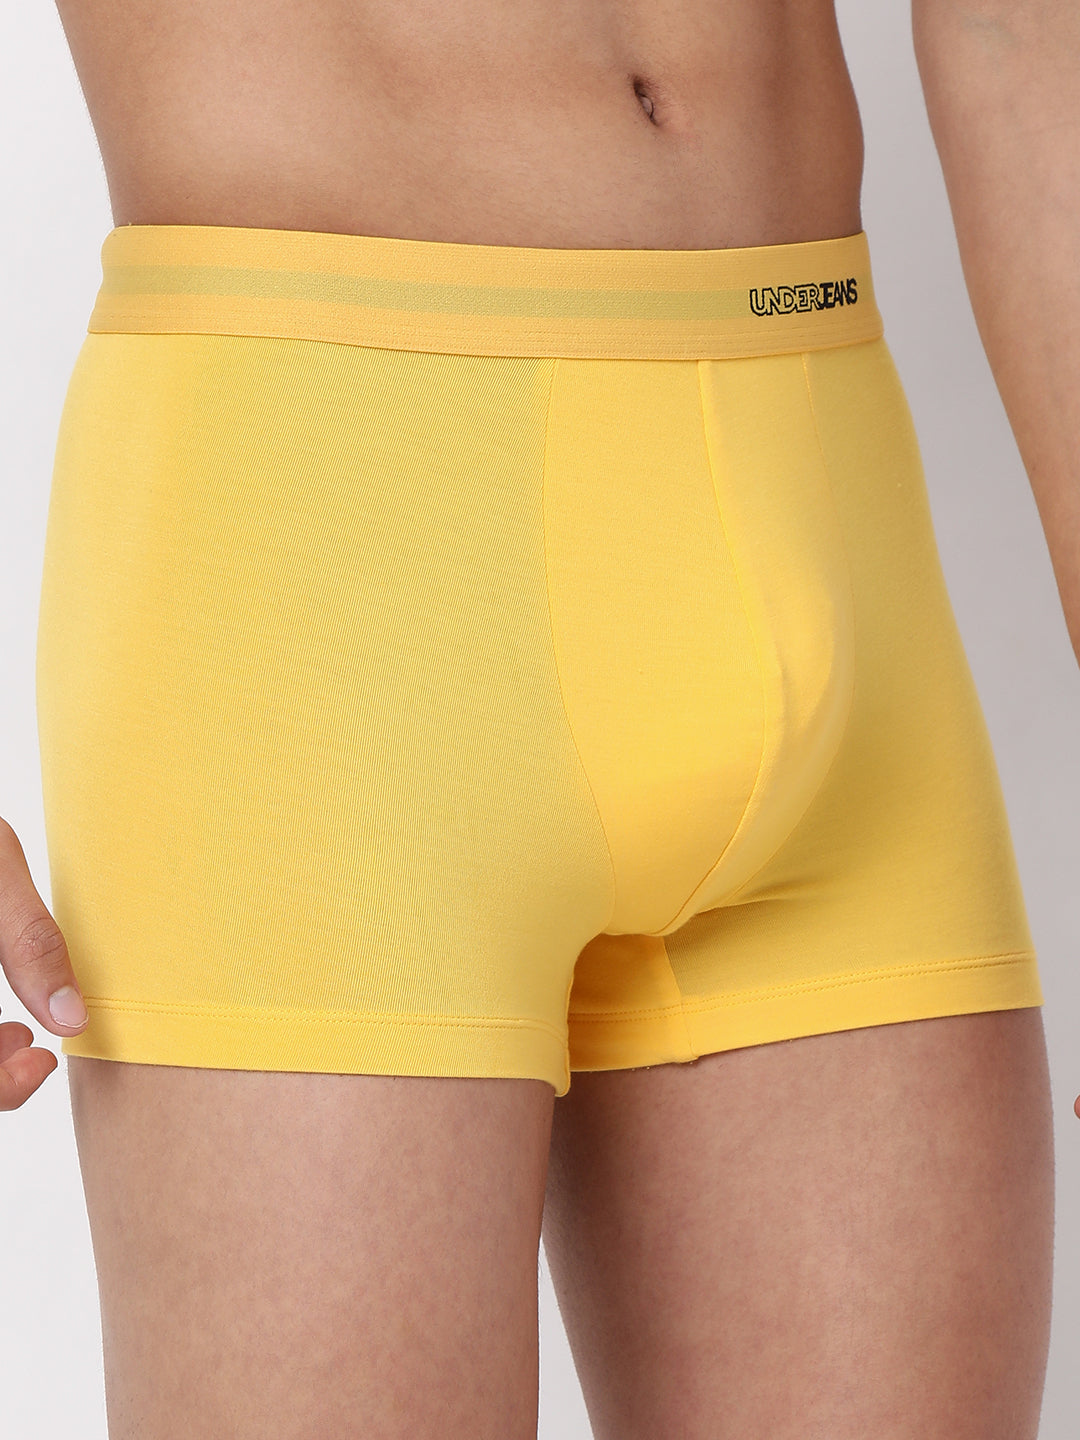 Men Premium Micromodal Yellow Trunk - UnderJeans by Spykar